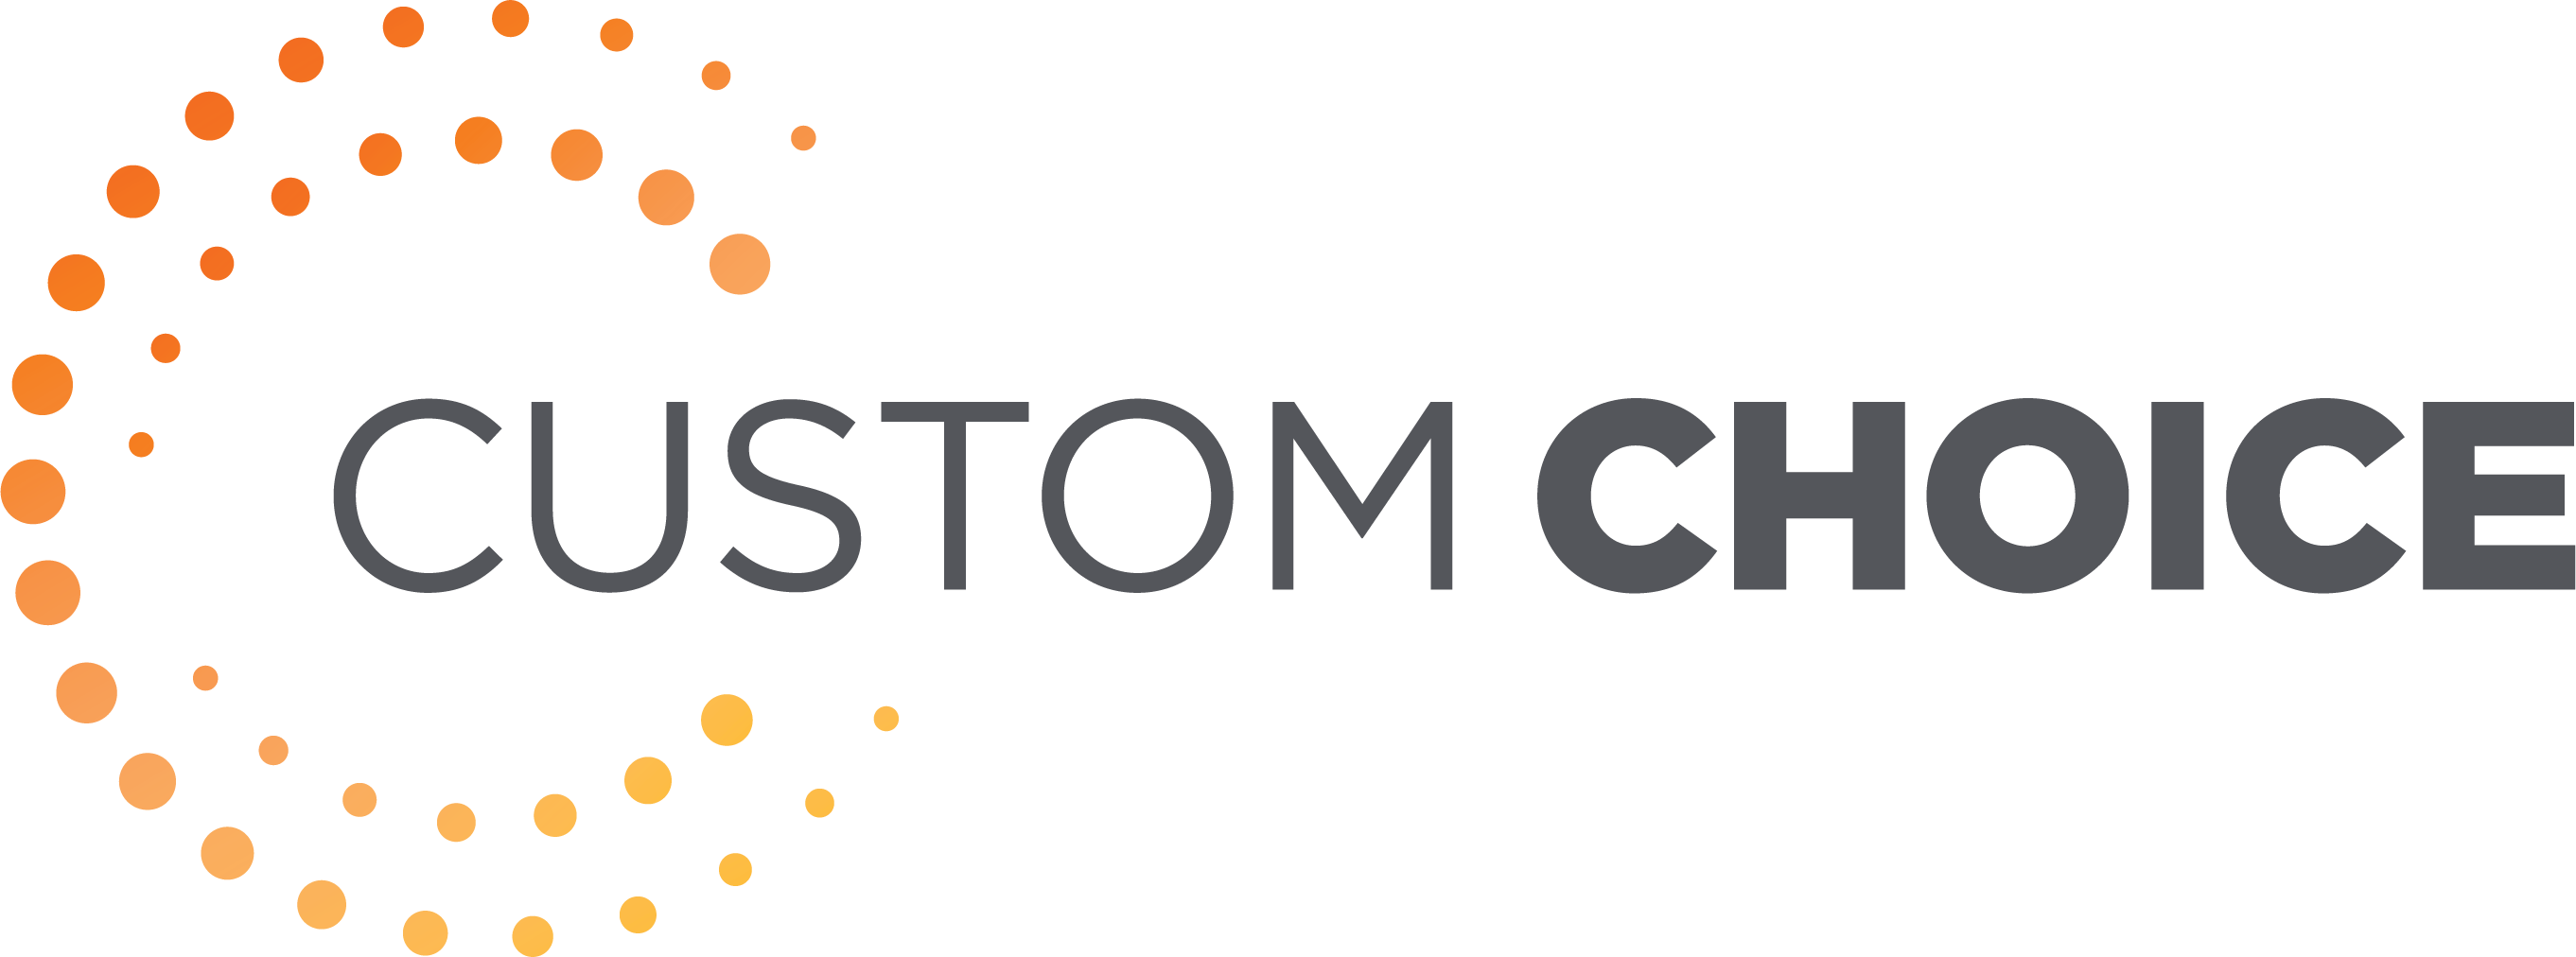 Custom Choice Loan